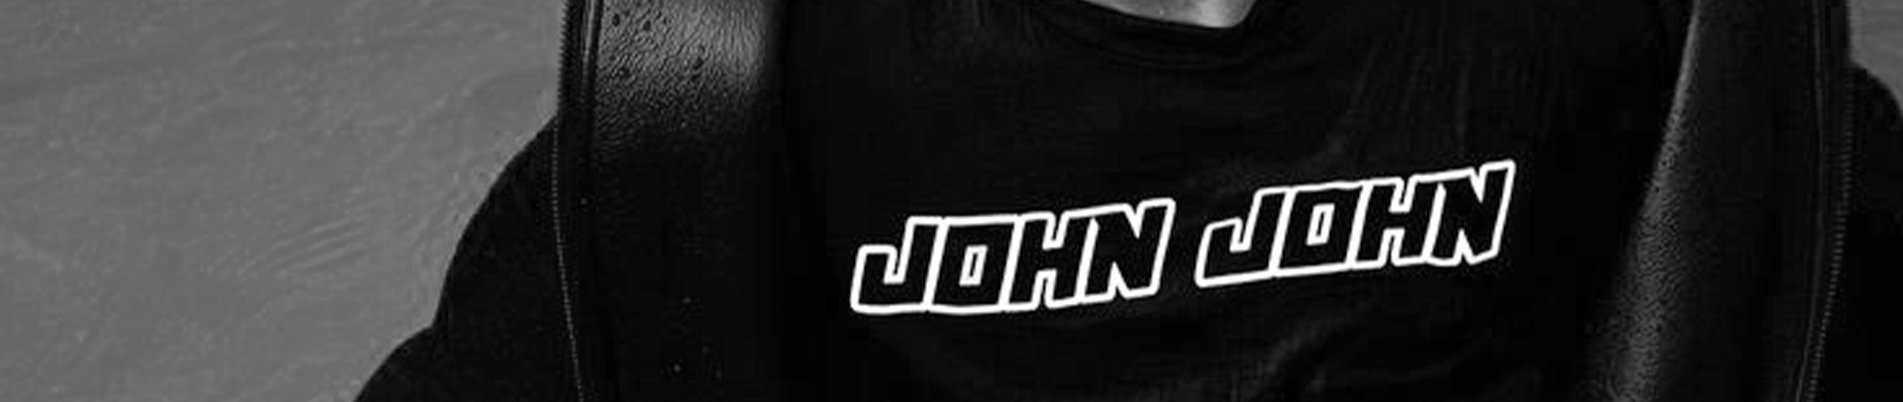 Camiseta John John Masculino 42-54-3488-009 M - Preto - Roma Shopping - Seu  Destino para Compras no Paraguai